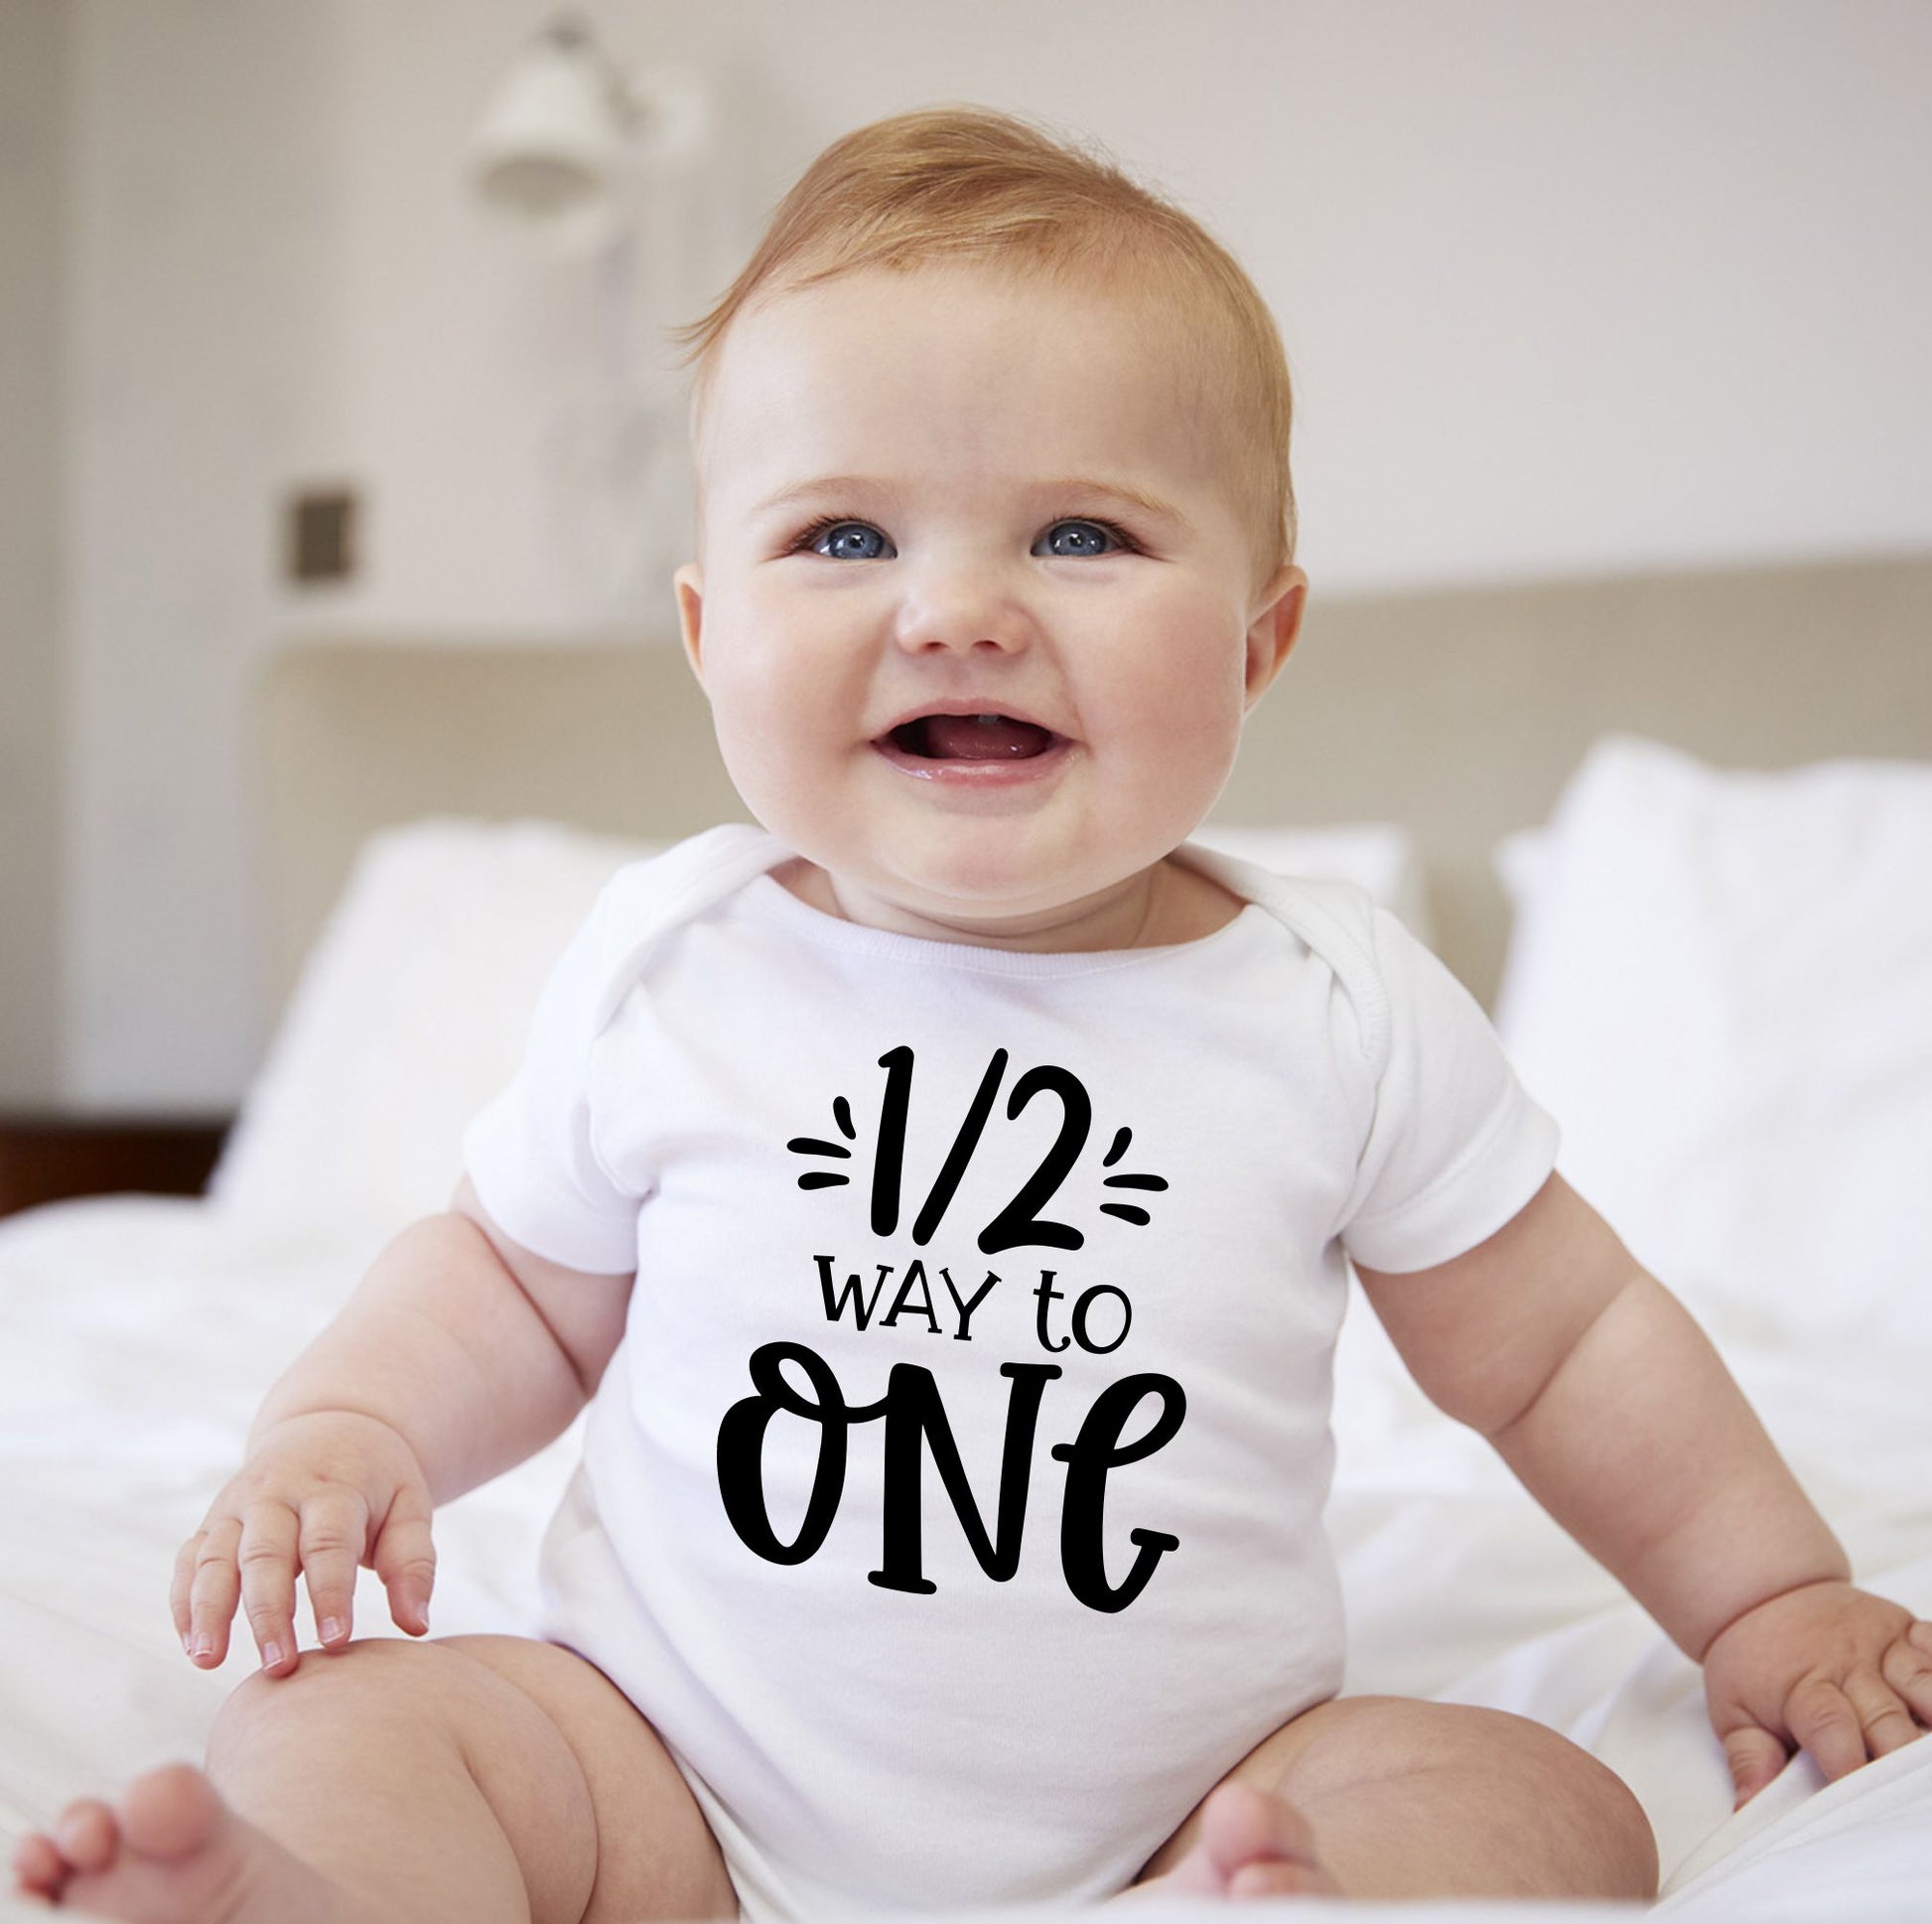 Baby 1/2 Birthday Onesies - 1/2 Way to ONE - MYSTYLEMYCLOTHING